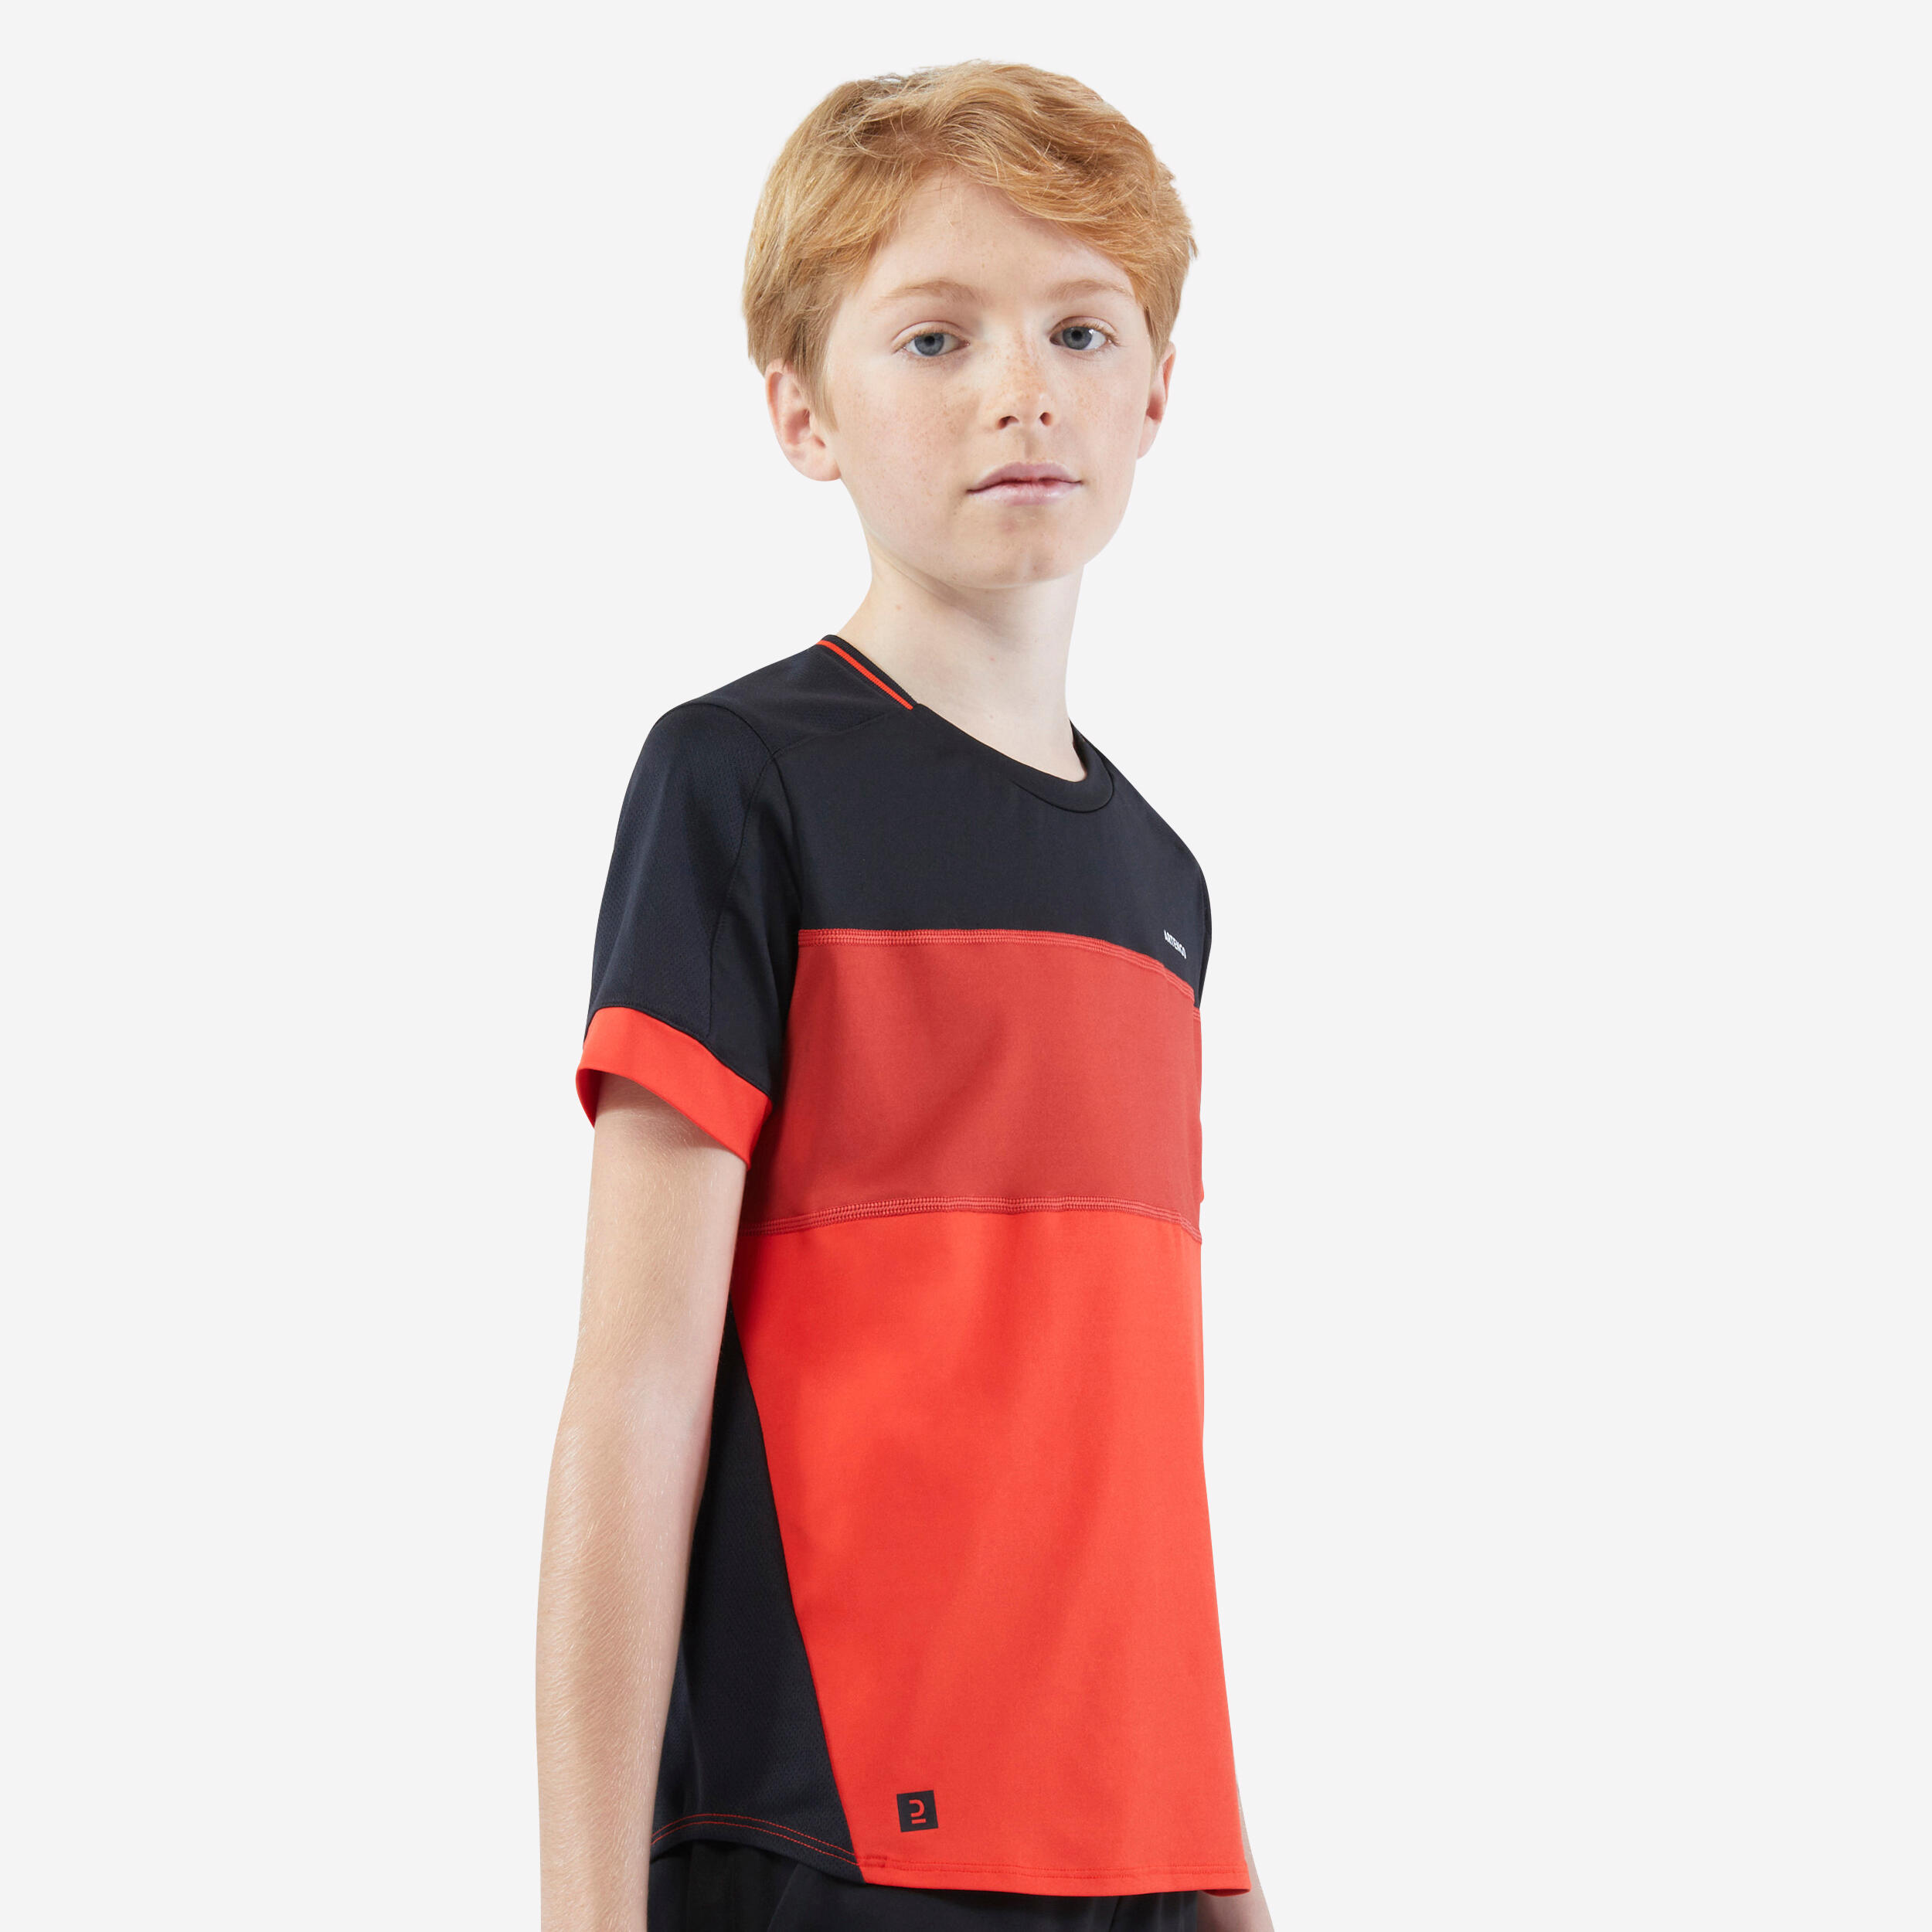 ARTENGO Boys' Tennis T-Shirt TTS Dry - Black/Red